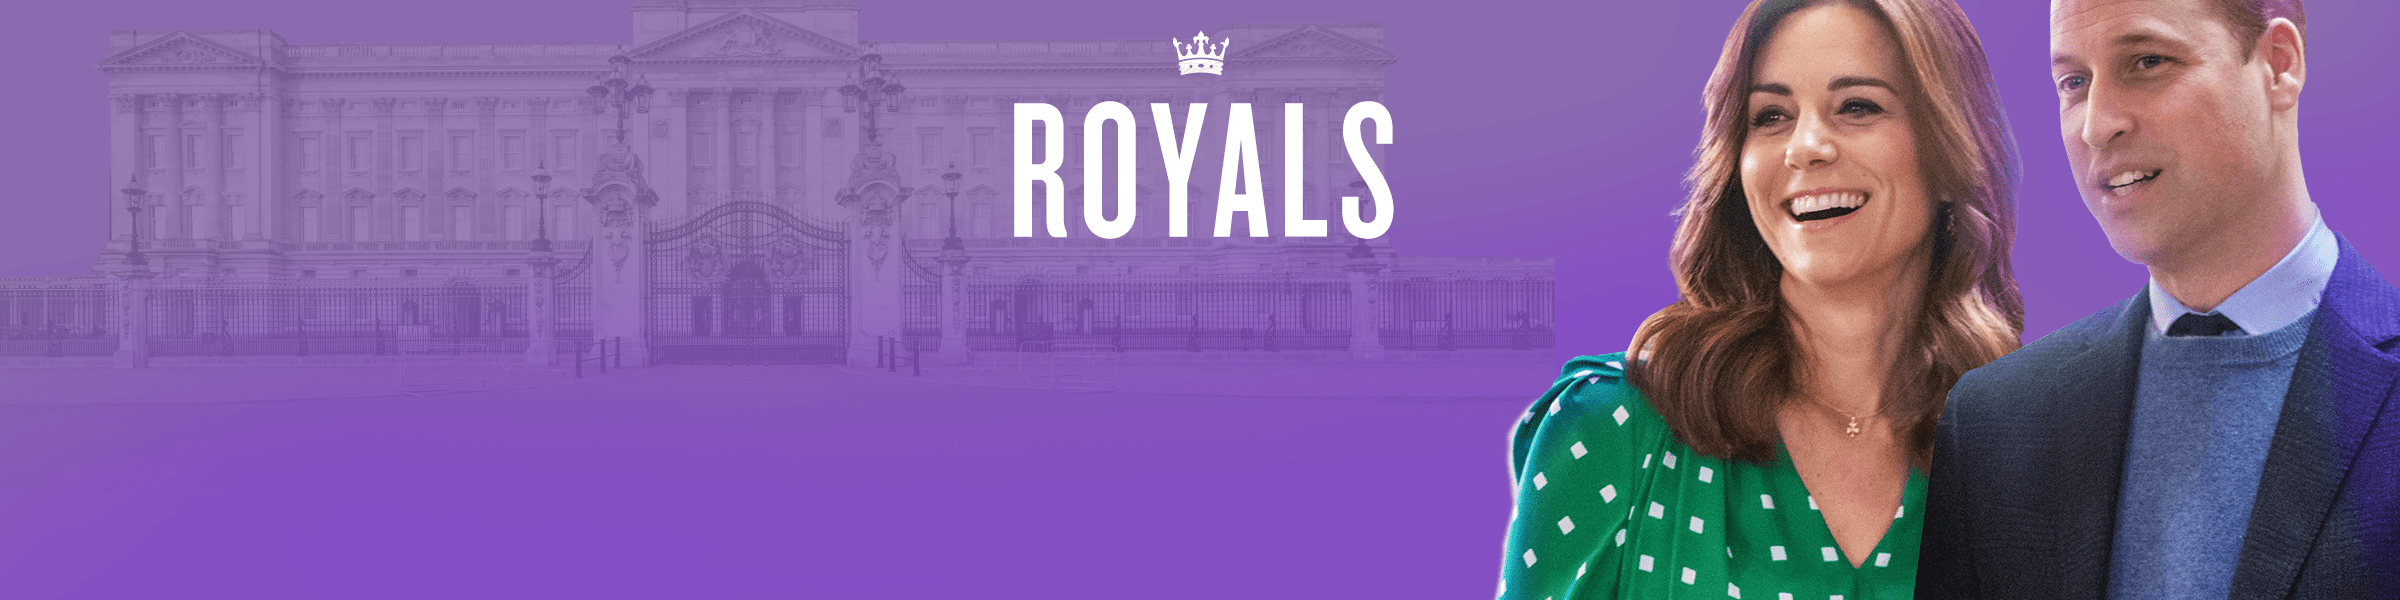 Royals Category Header Image